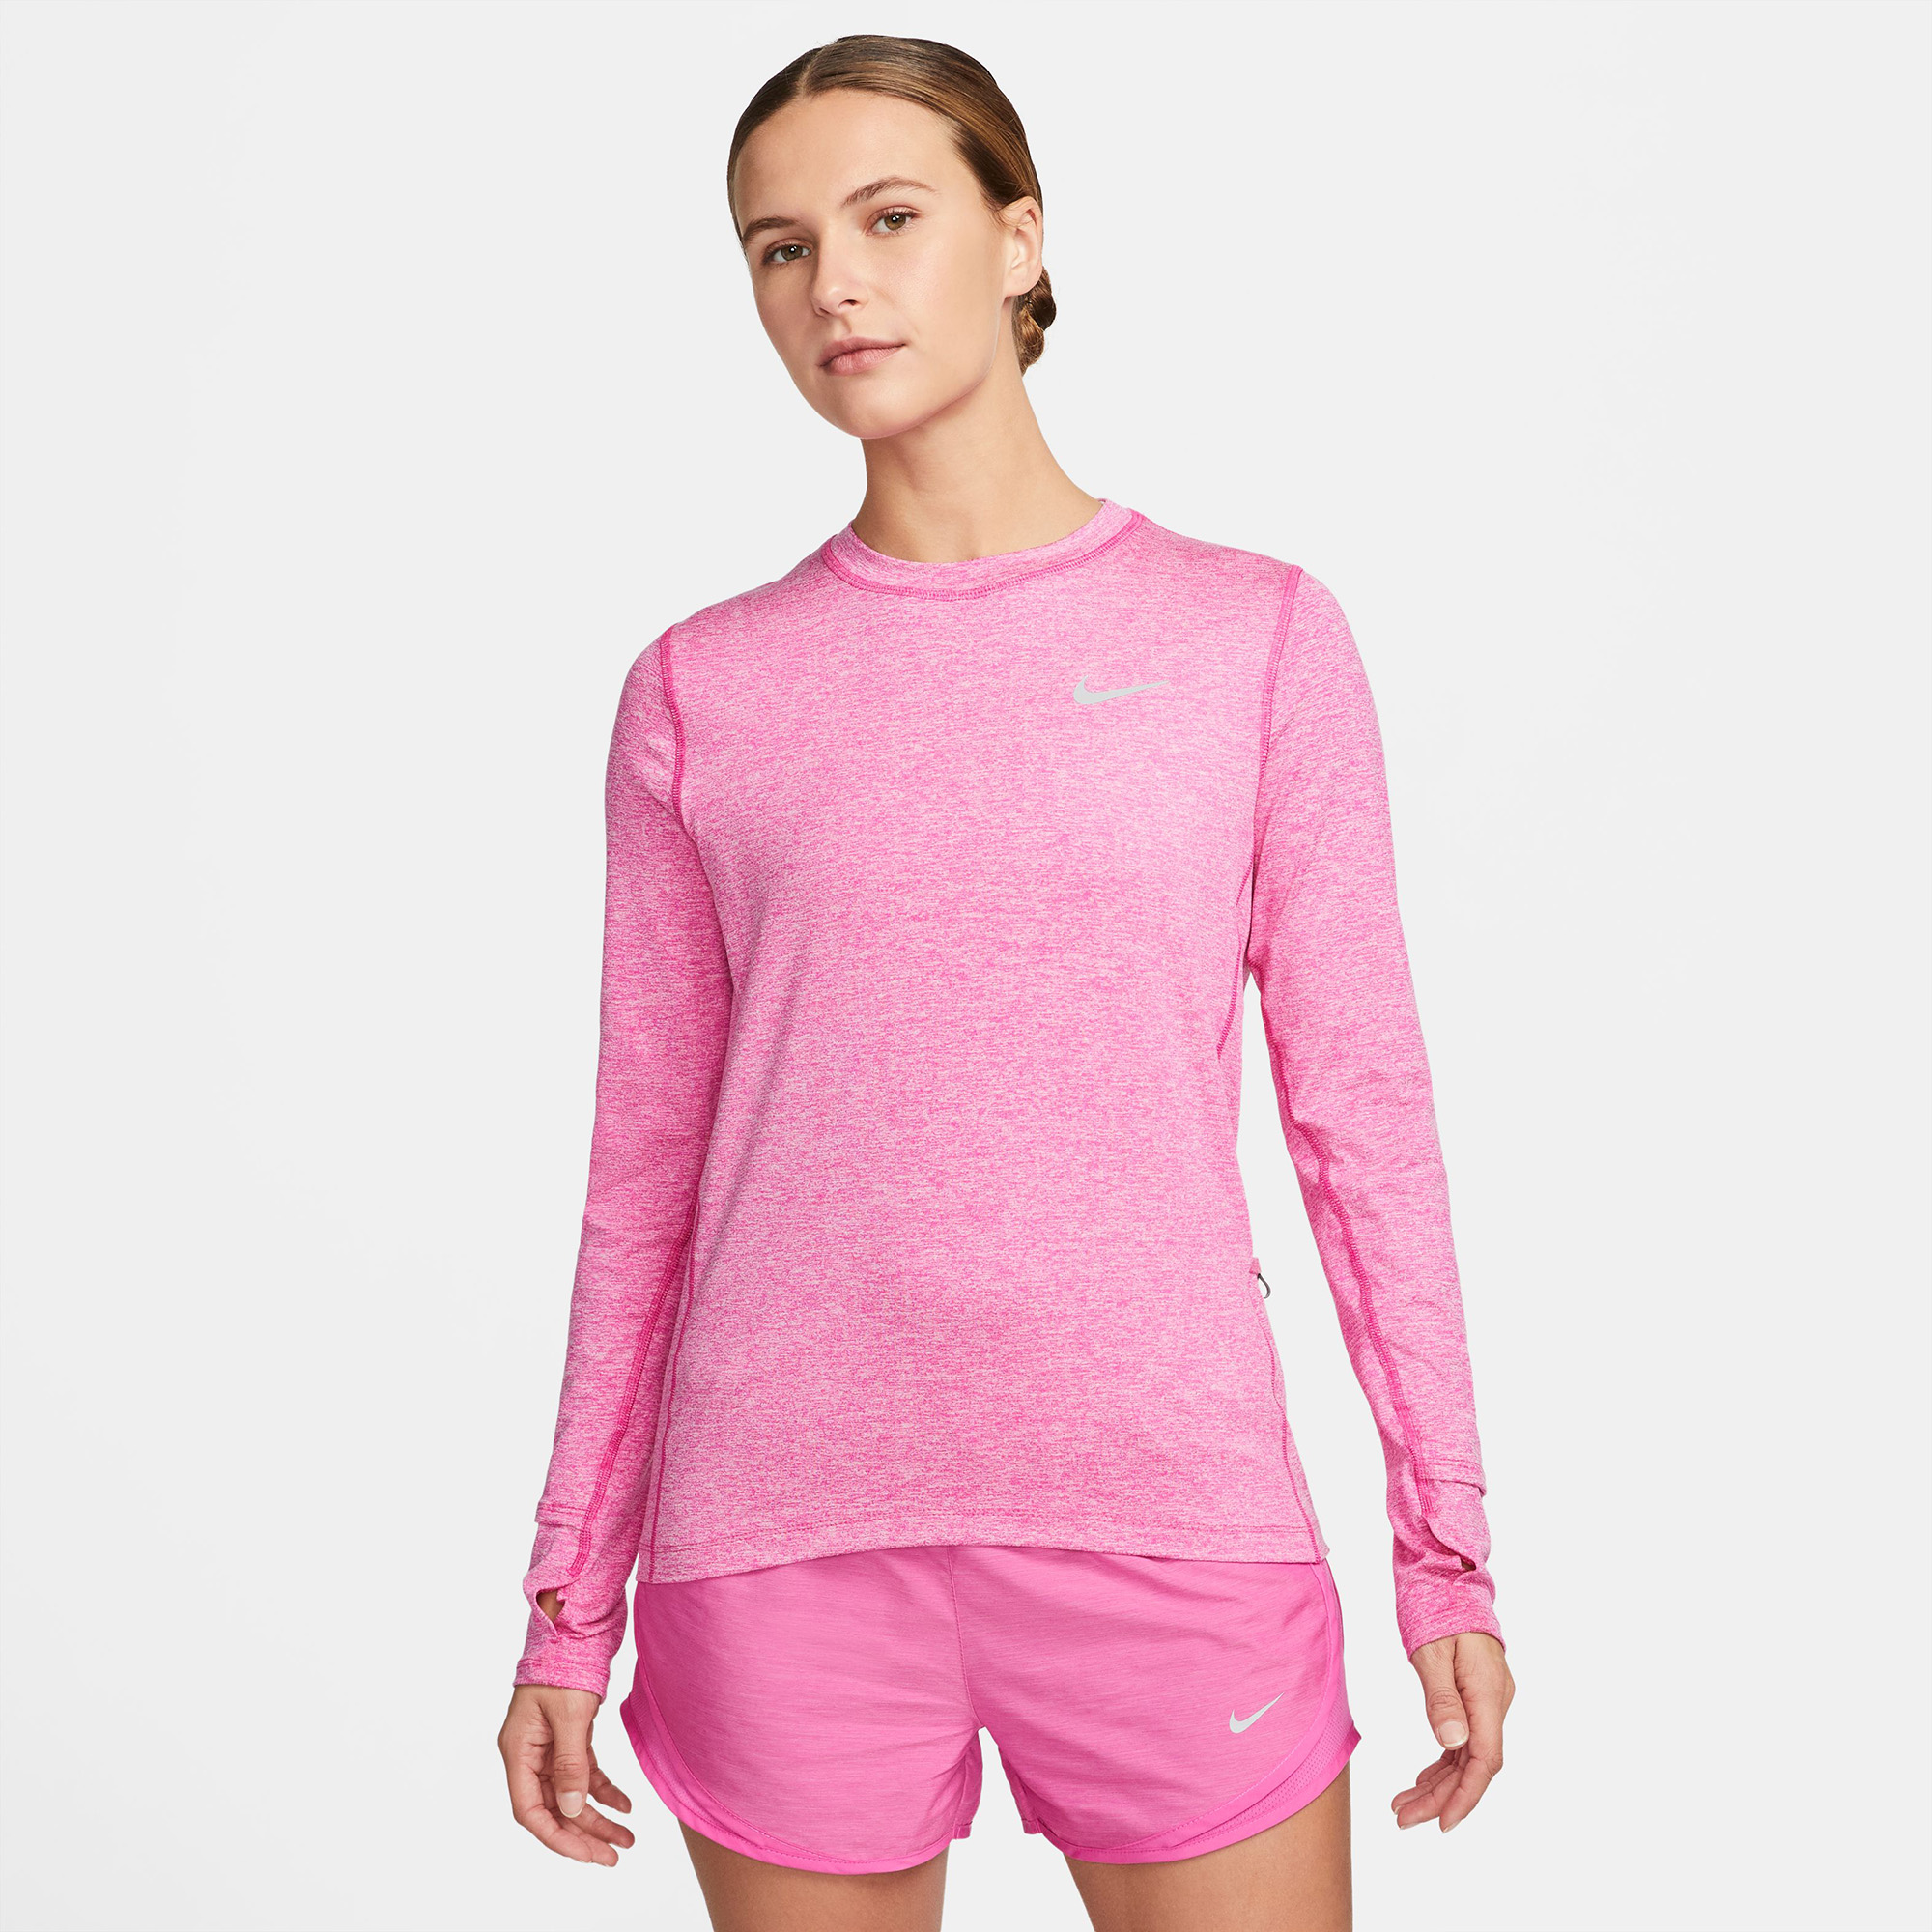 Camiseta nike rosa mujer | Intersport